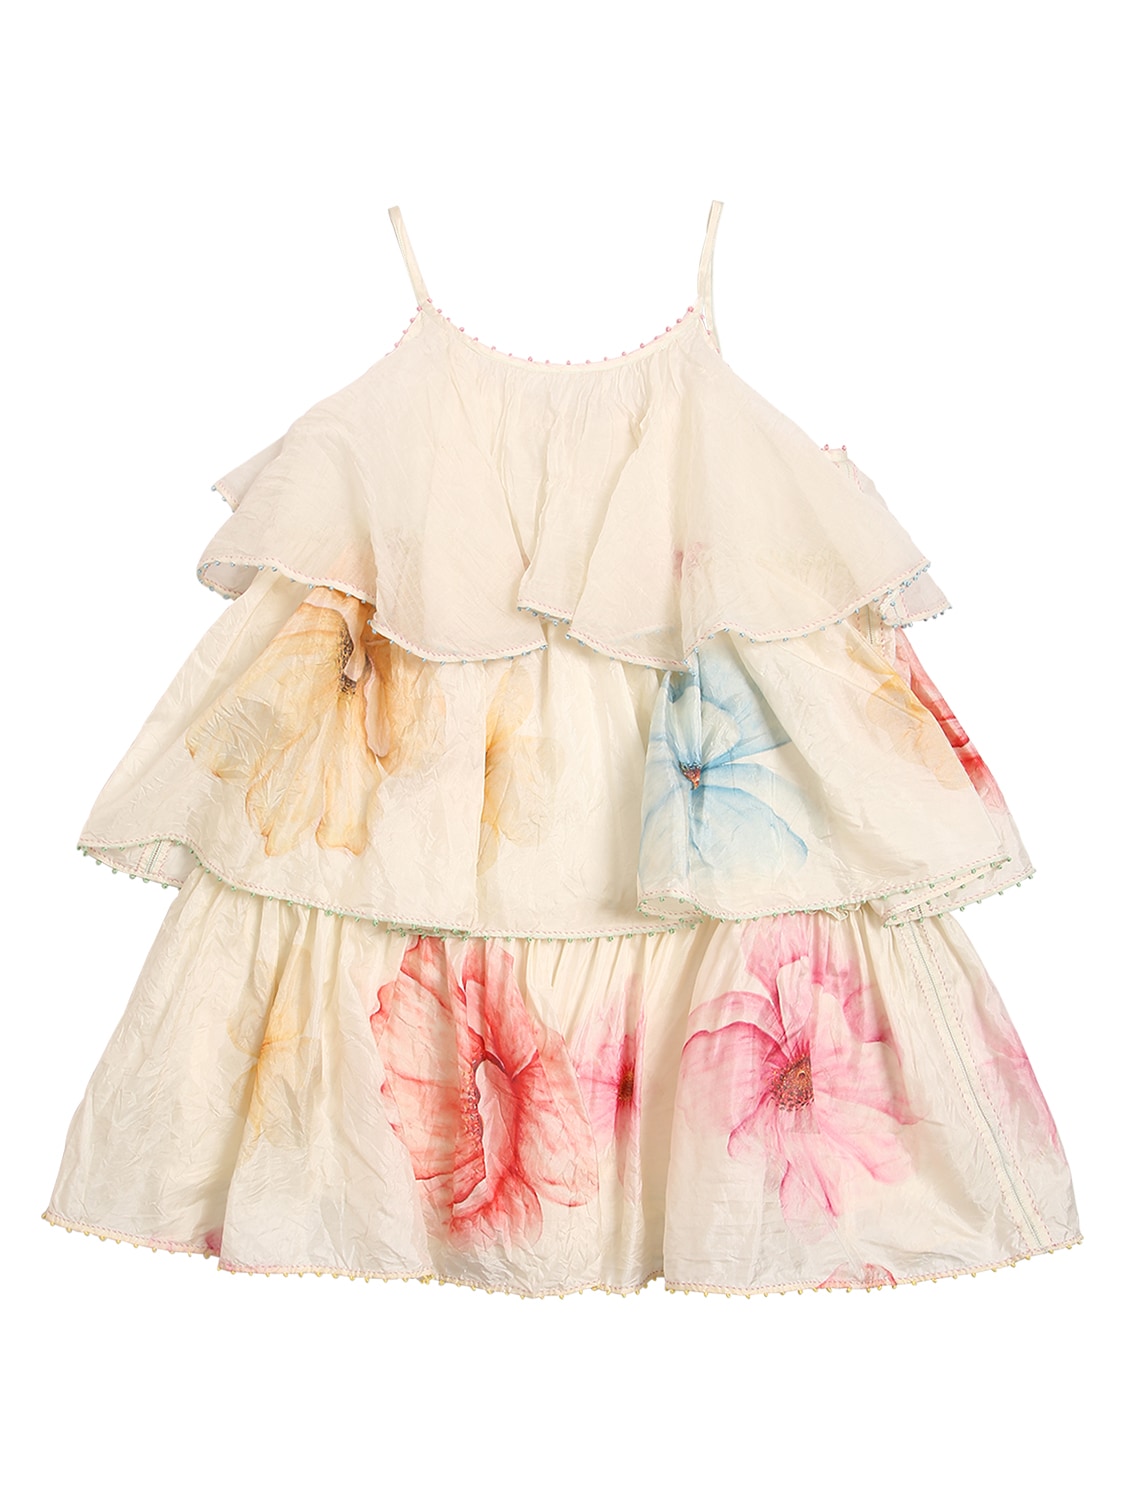 Péro Kids' Flower Print Cotton Satin Layered Dress In Off White,multi